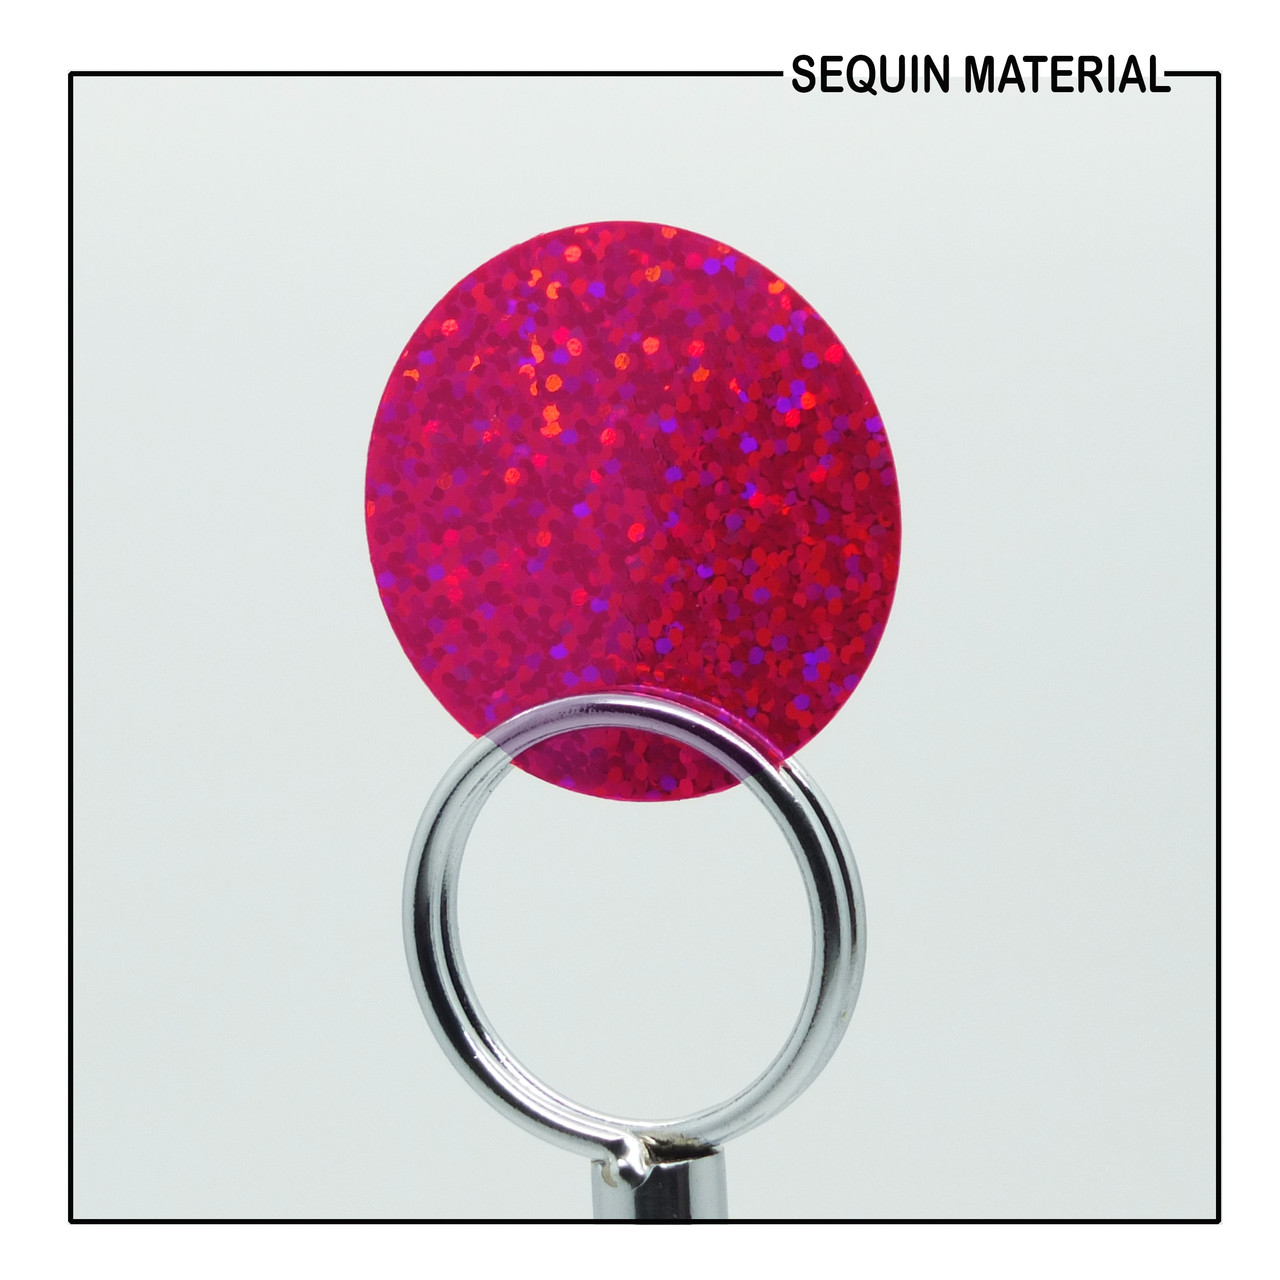 SequinsUSA Hot Pink Hologram Glitter Sparkle Metallic Sequin Material RL525